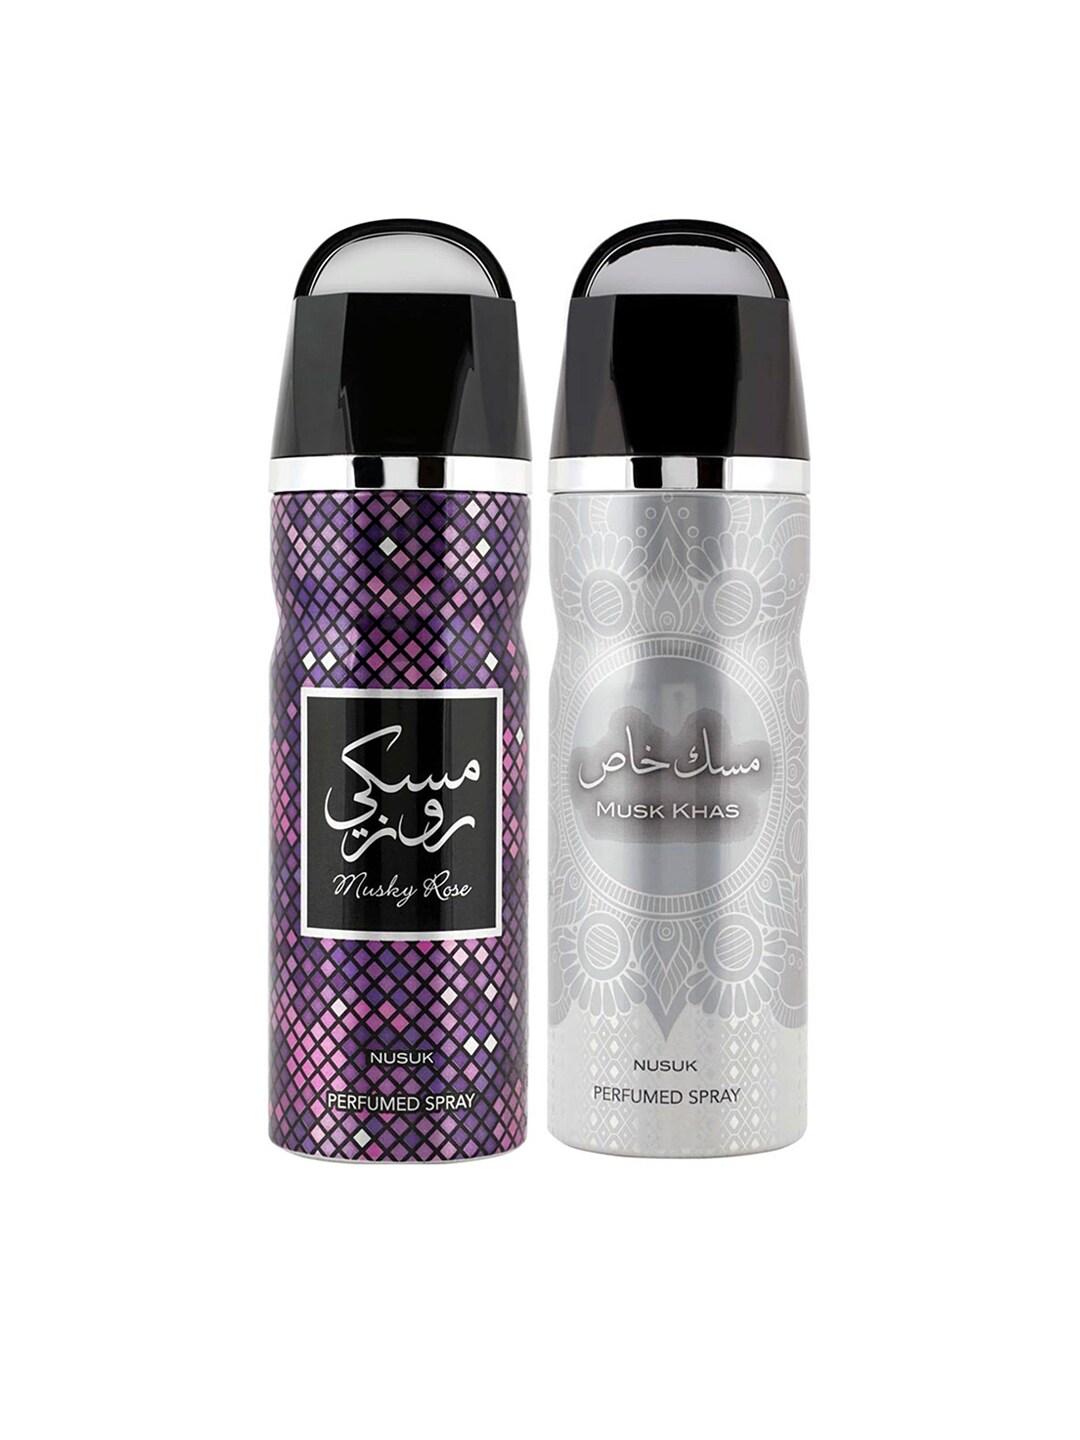 NUSUK Set of 2 Premium Long-Lasting Deodorants 200 ml each - Musky Rose & Musk Khas